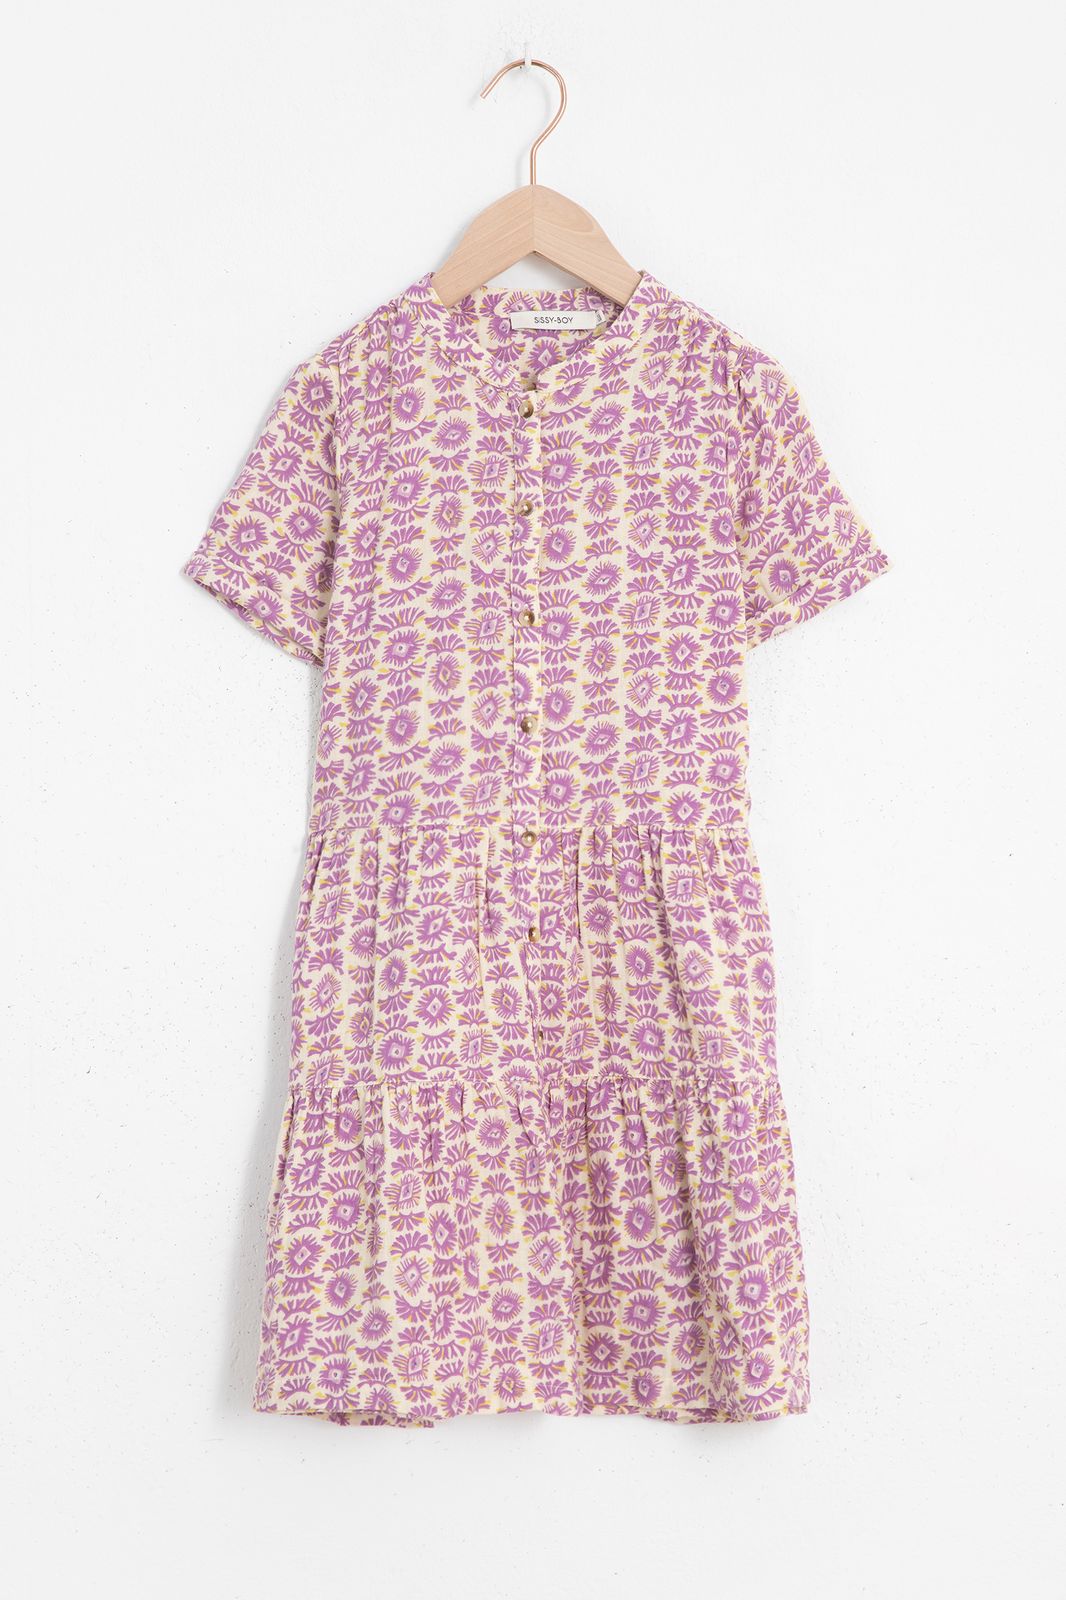 Musslin-Kleid mit lila Muster - hellgelb